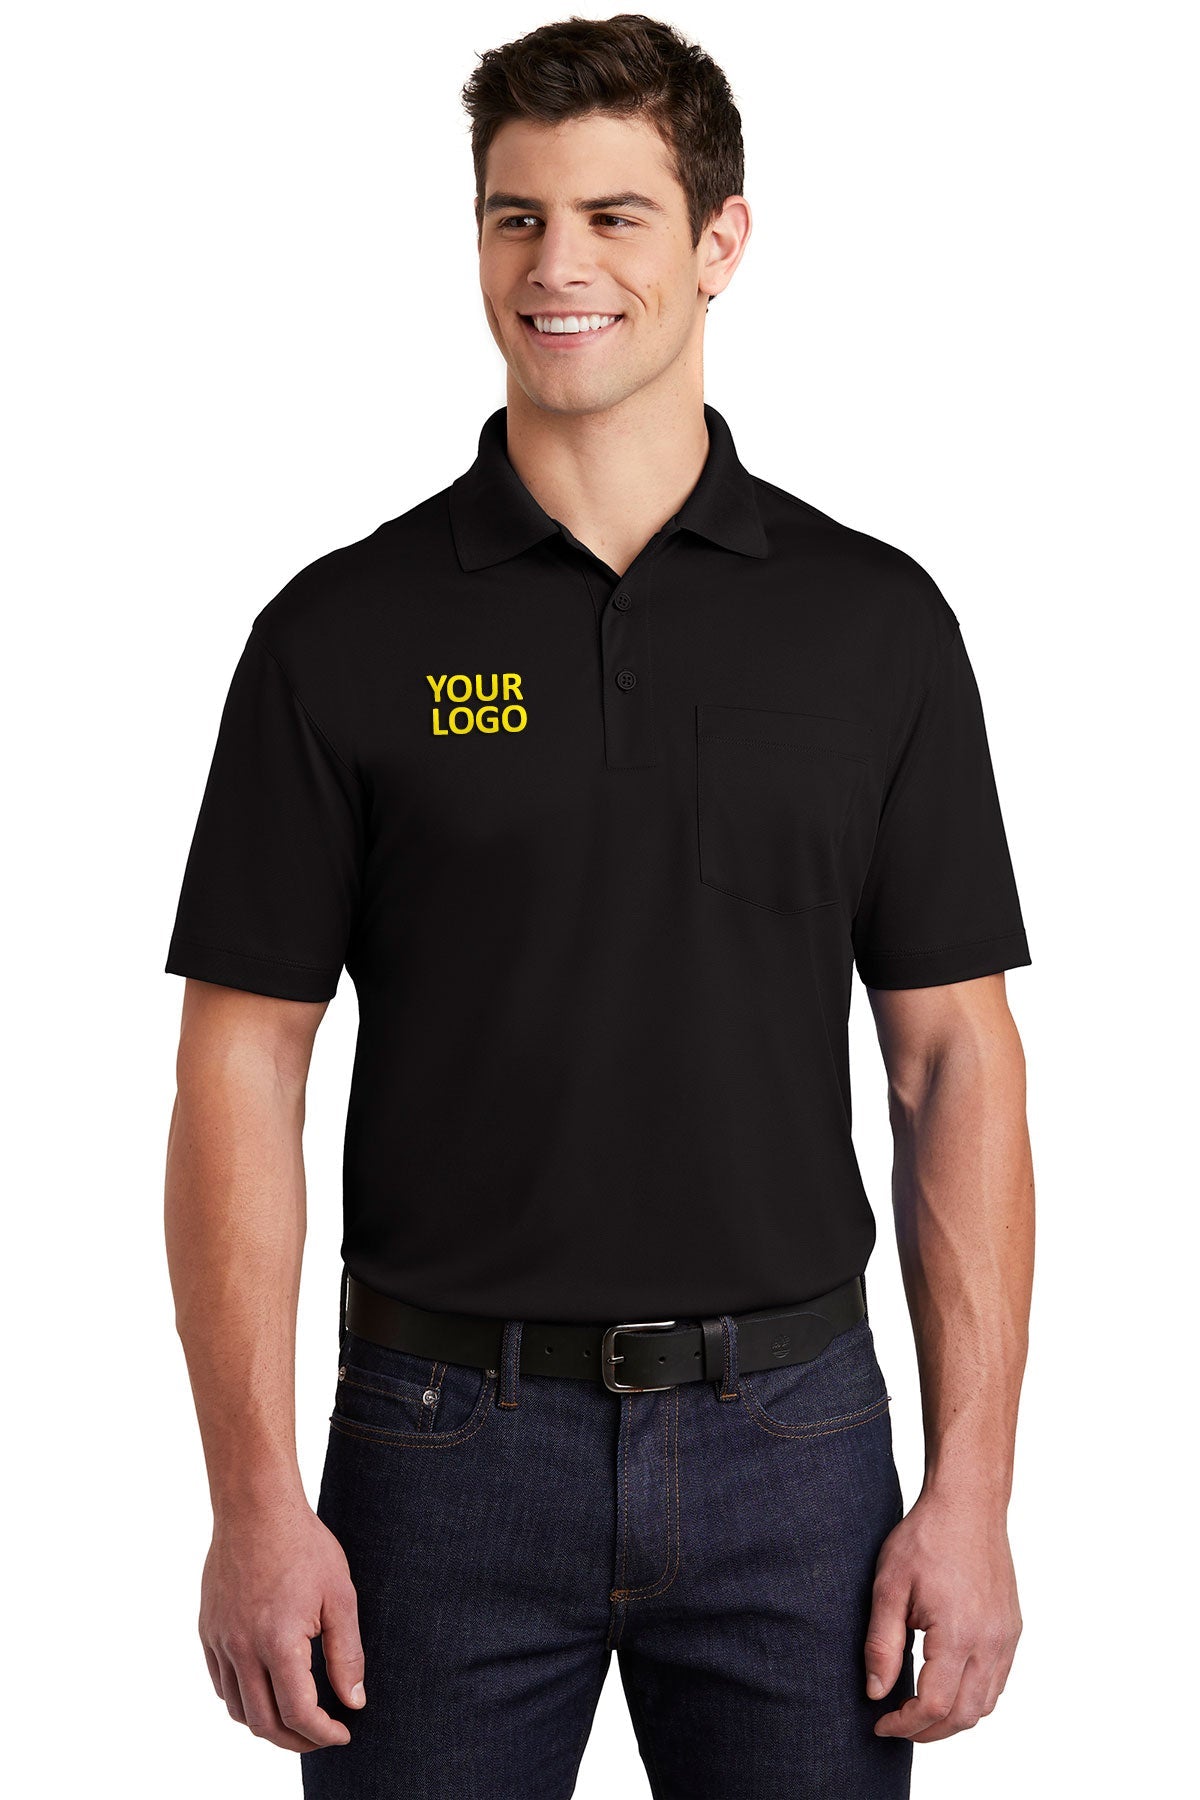 Sport-Tek Black ST651 polo shirts with logos